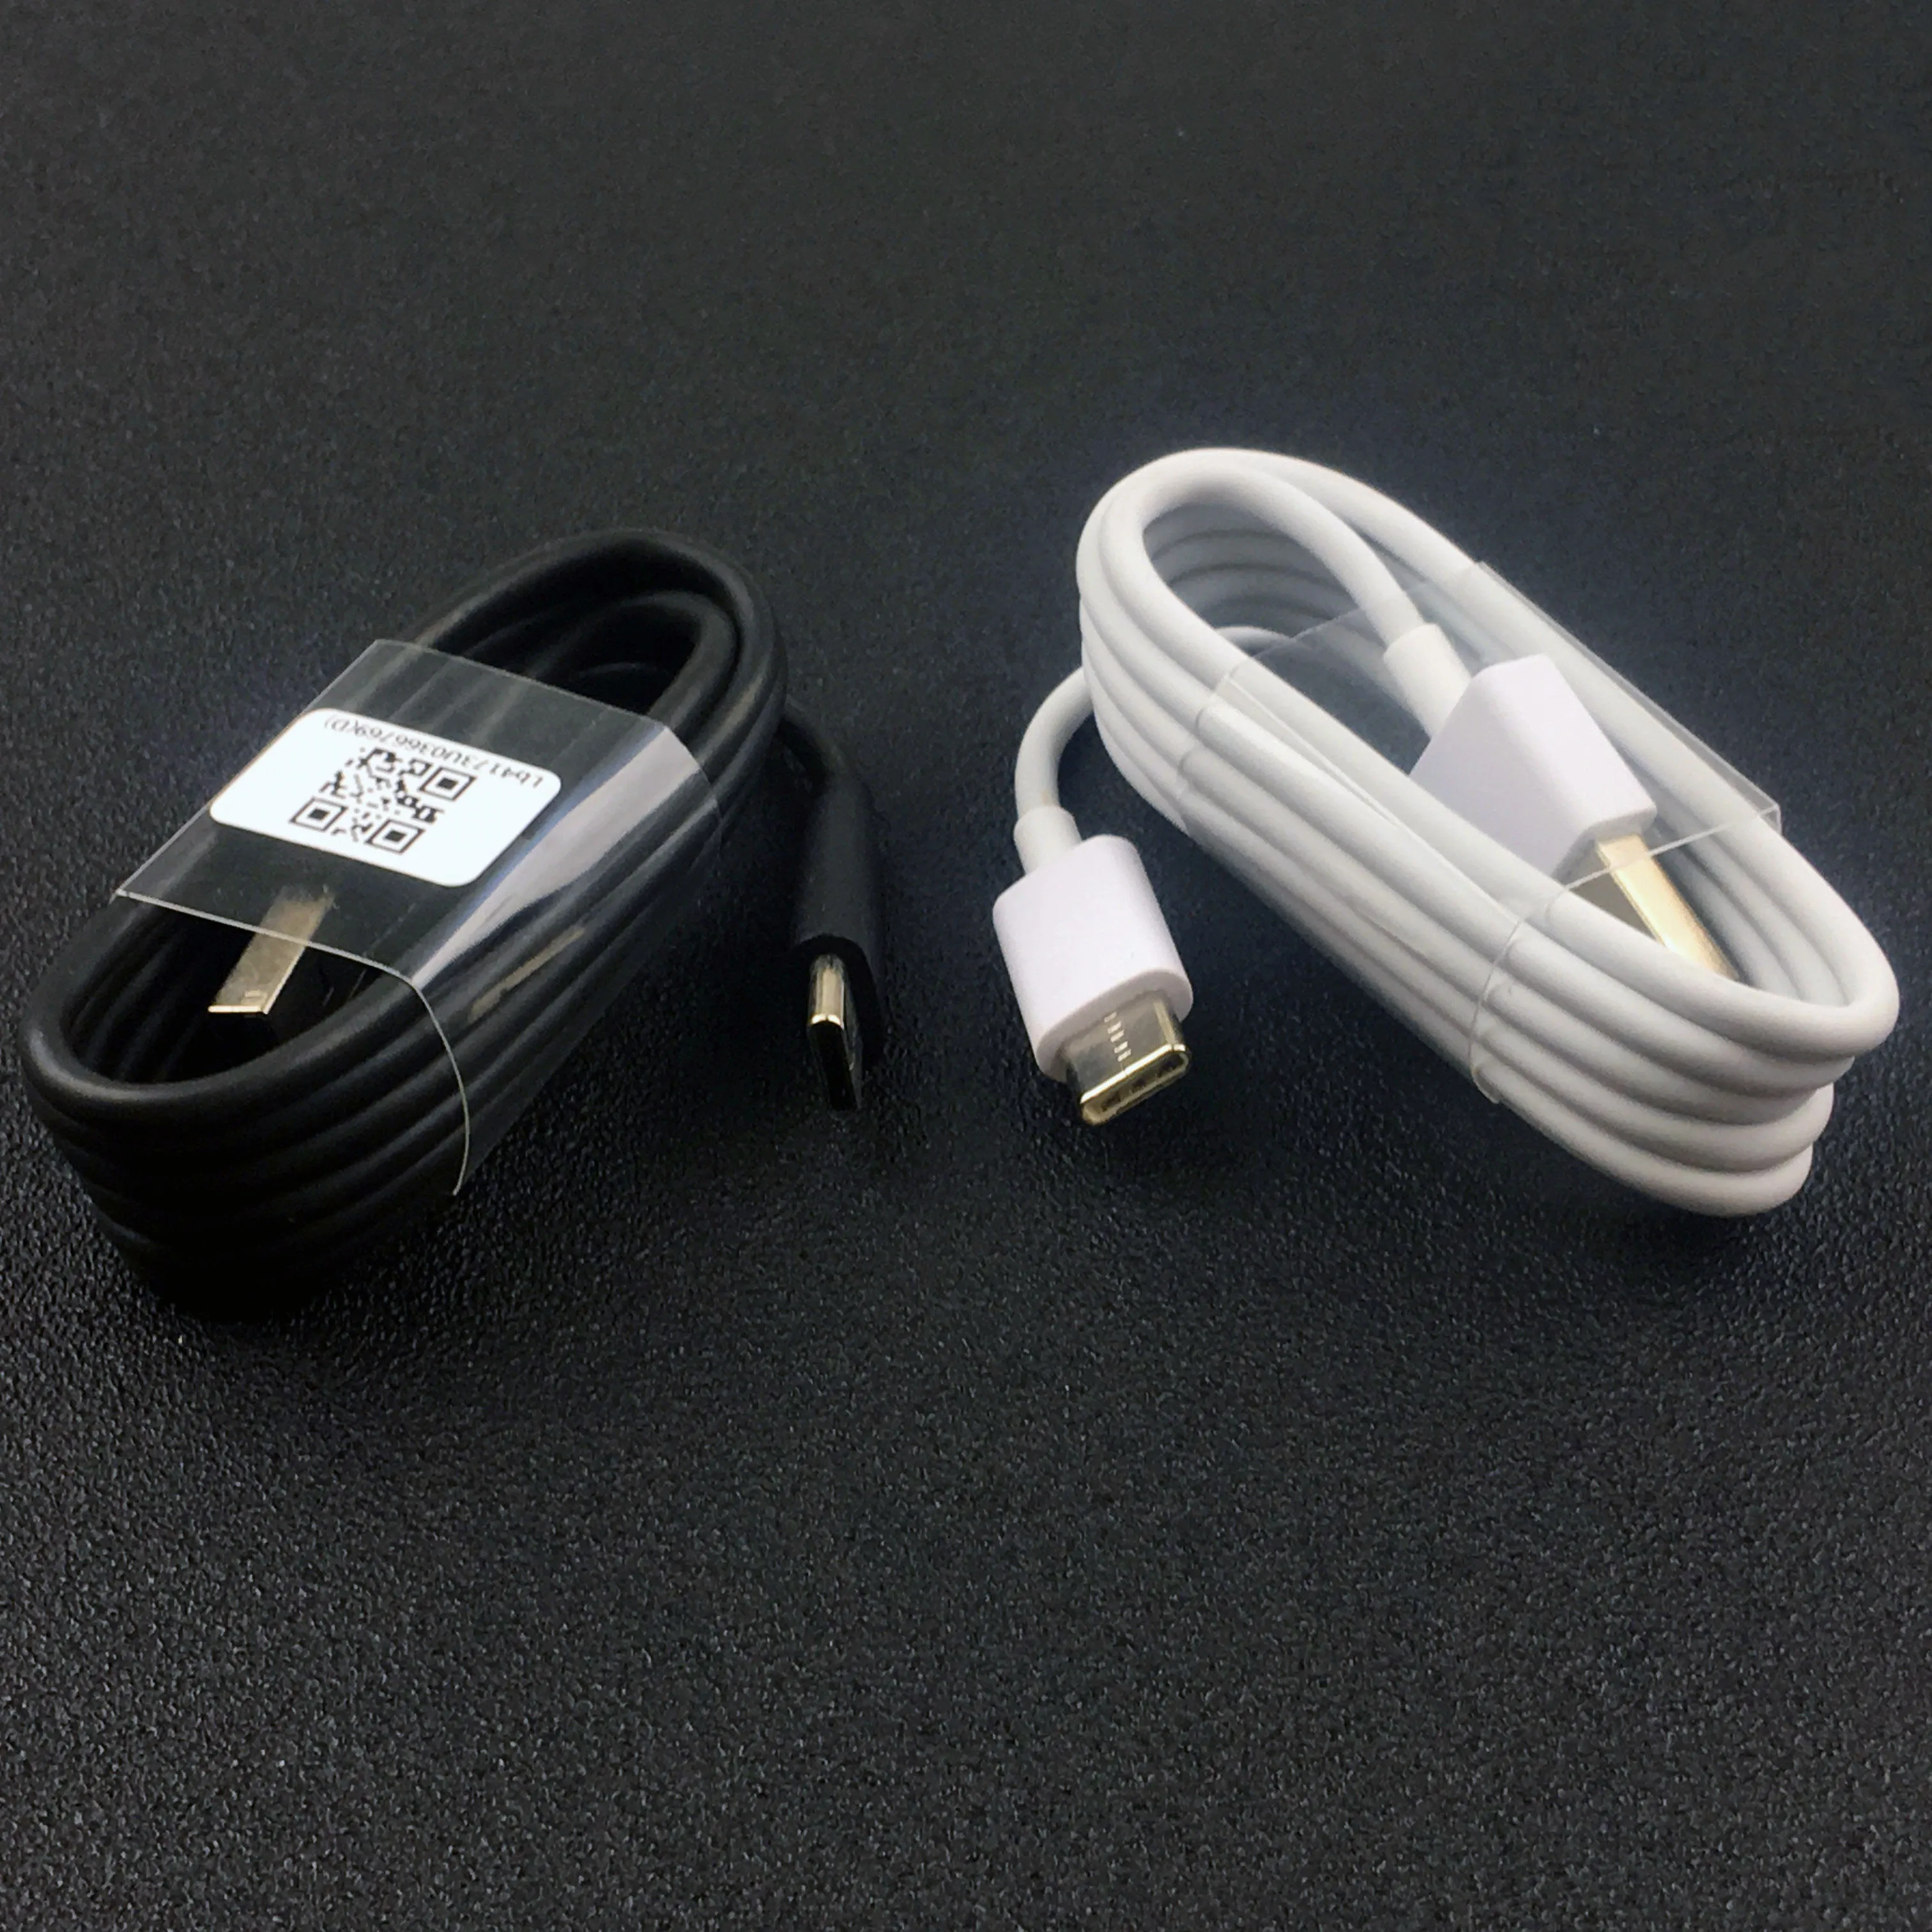 Xiaomi mi Max 3 кабель для быстрой зарядки 100 см кабель для передачи данных type C для mi 9 se 8 6 6x redmi note 7 pro mi x max 2 2 s 3